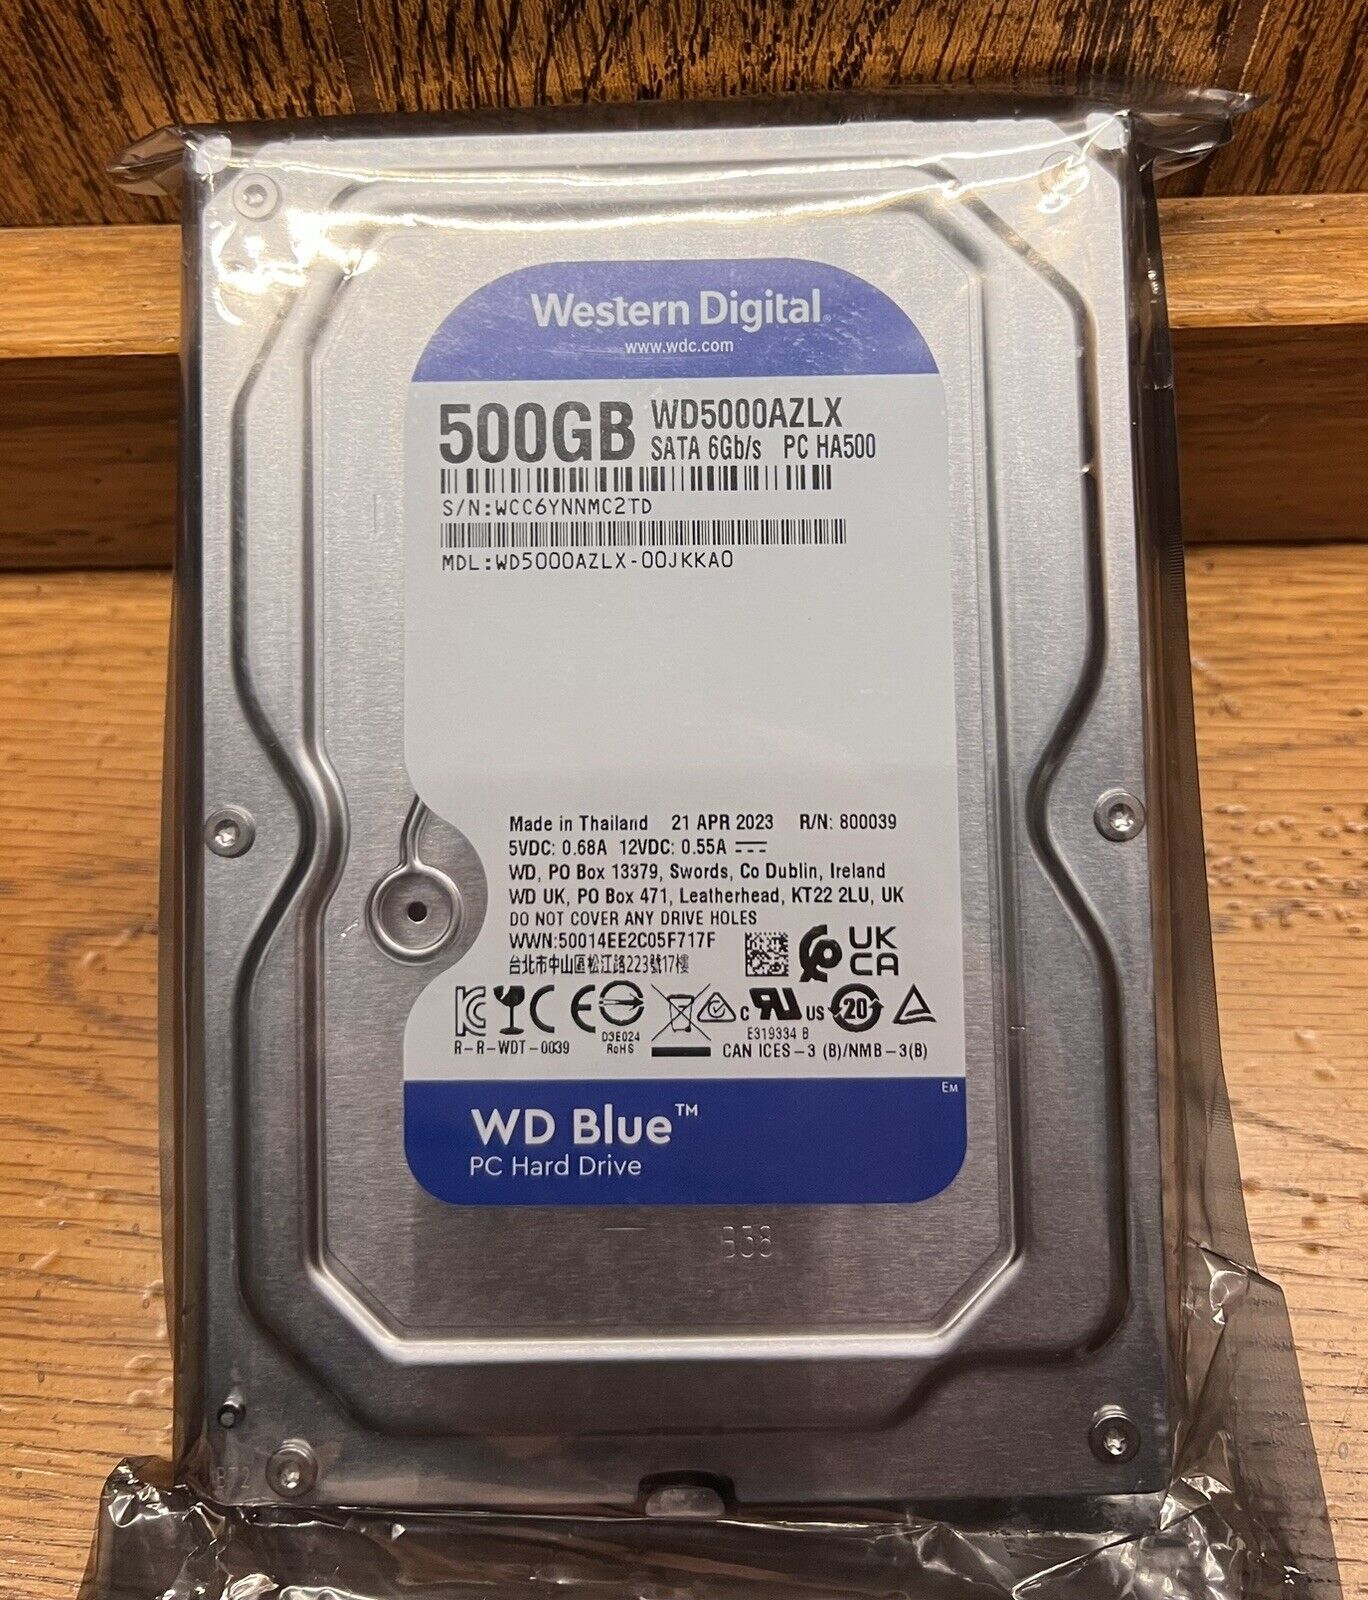 Western Digital WD5000AZLX Blue 500 GB 3.5-inch PC Hard Drive 500GB - NEW